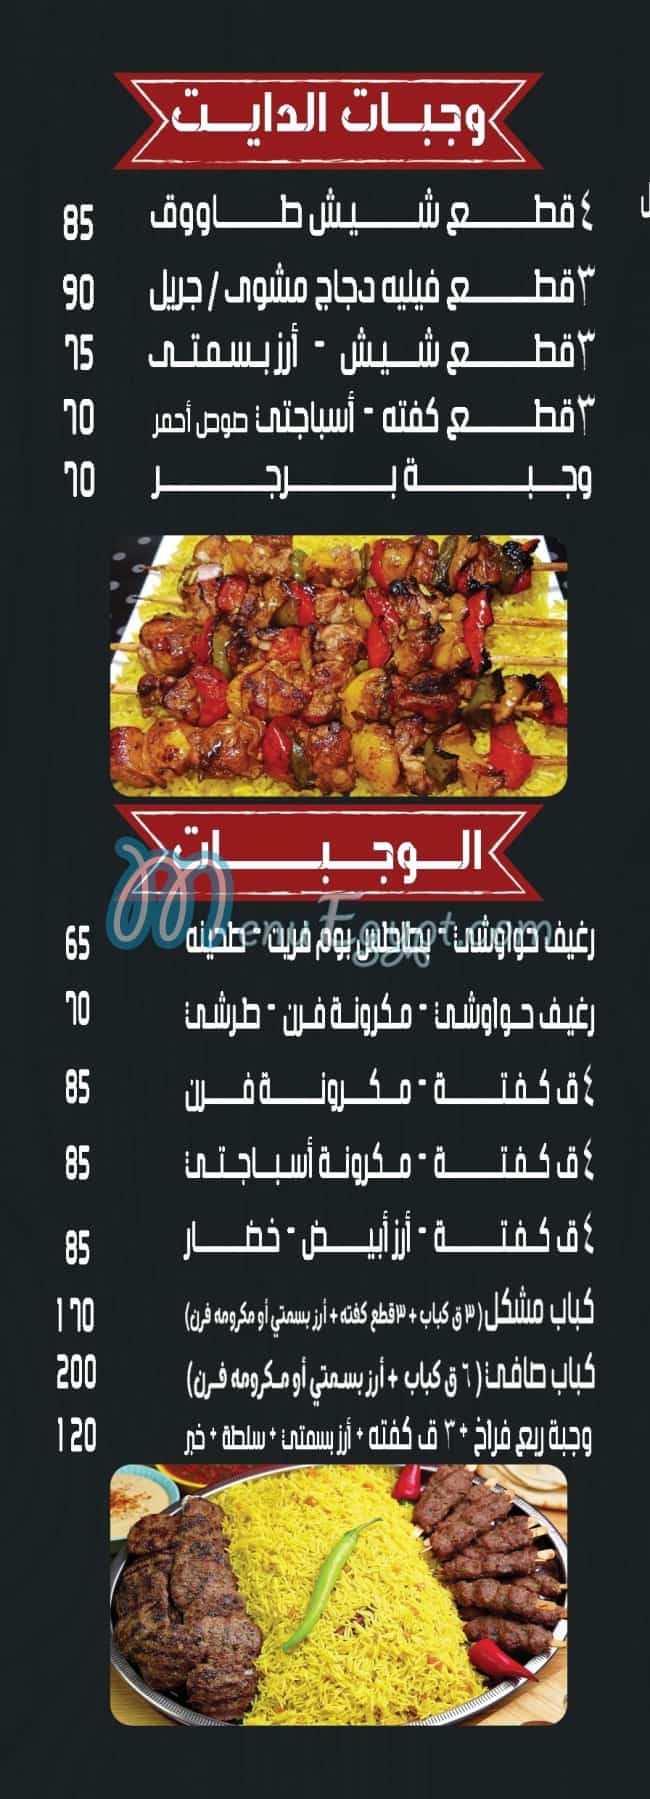 Elshabrawy Maadi menu Egypt 5